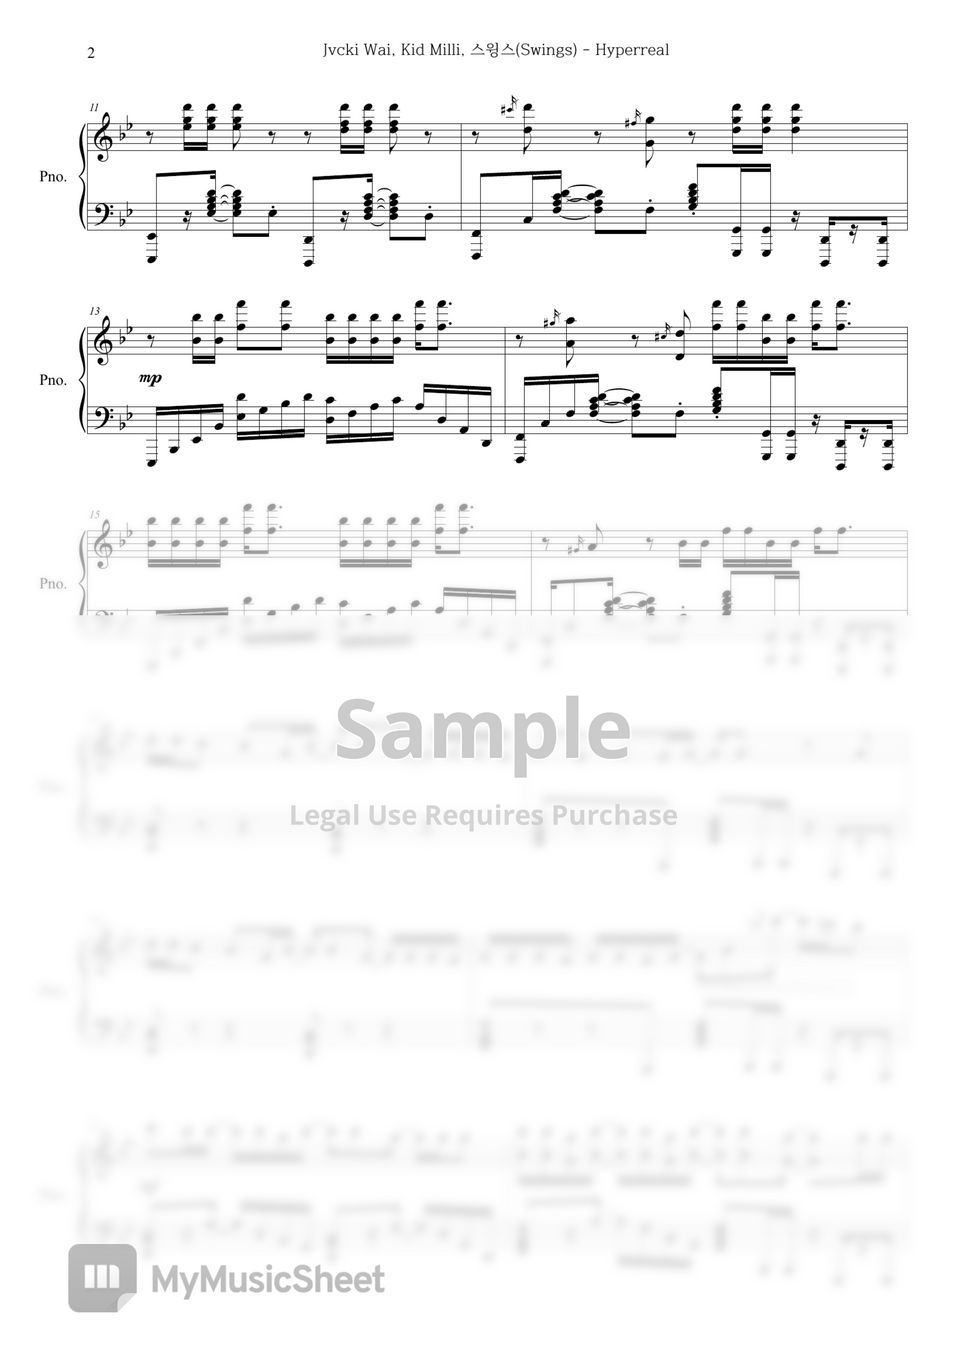 Jvcki Wai, Kid Milli, Swings - Hyperreal by Pianolog